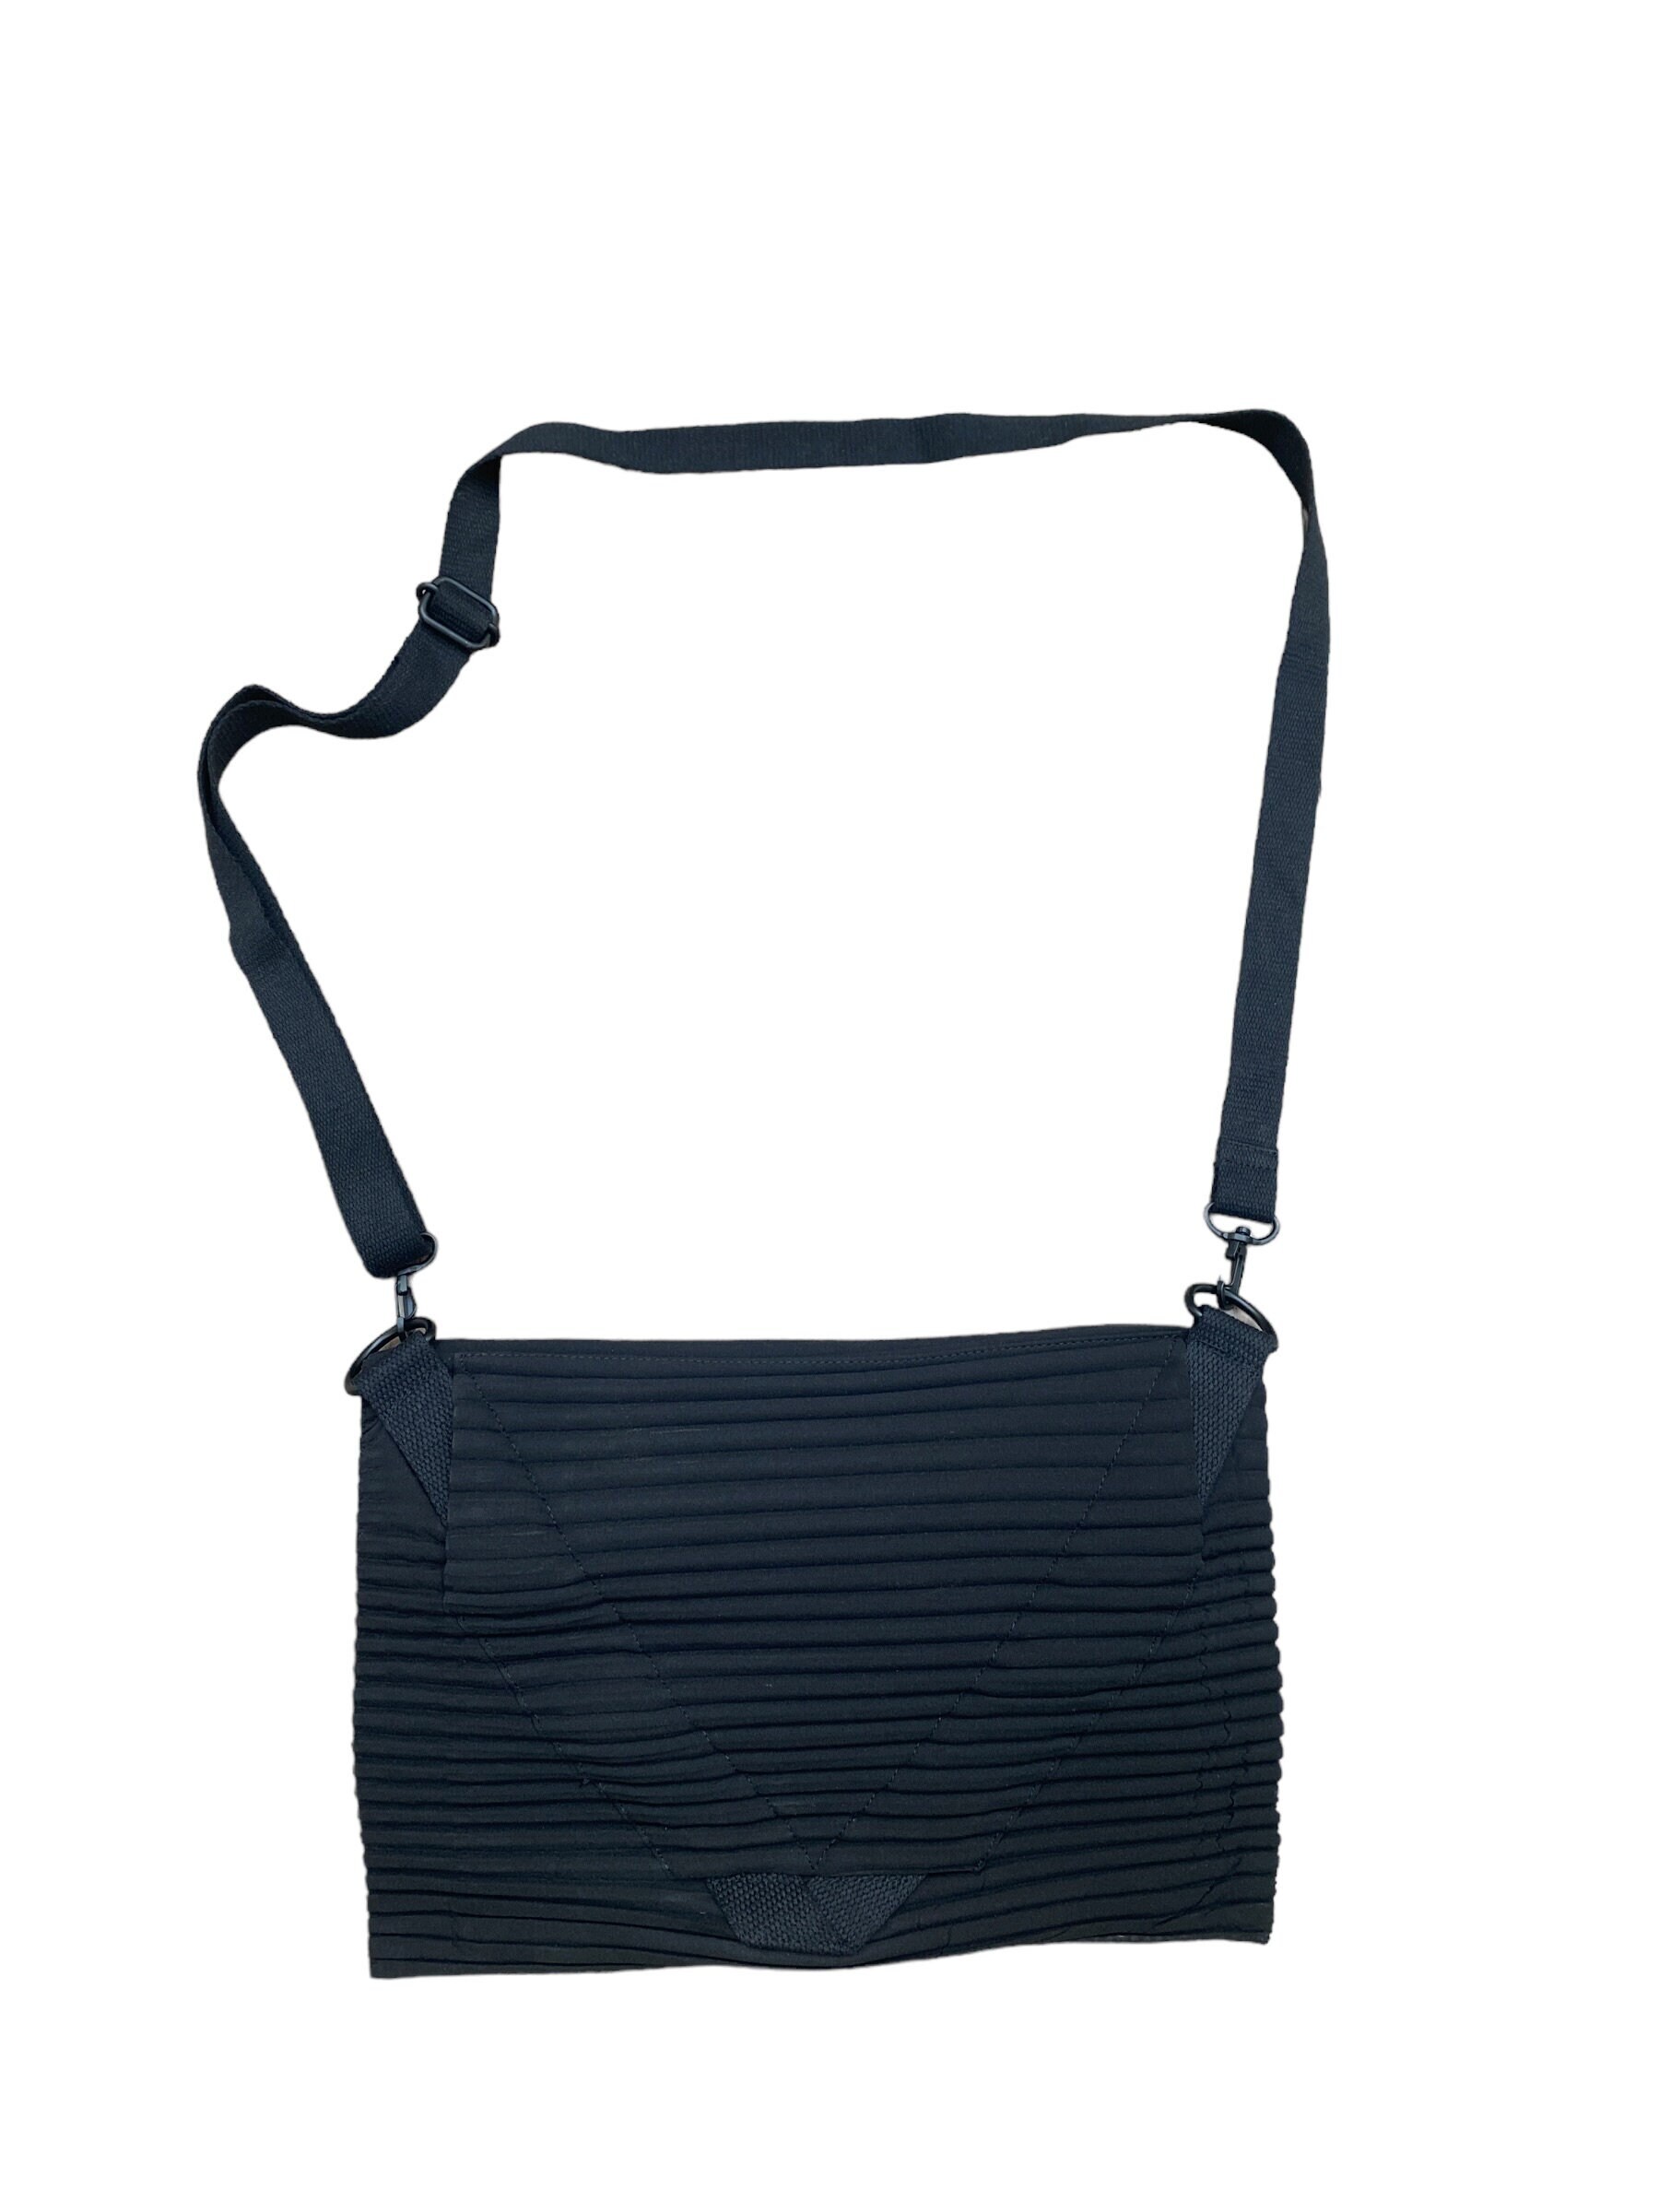 Issey Miyake Homme Black Pleats Foldable Shoulder Bag Unisex 